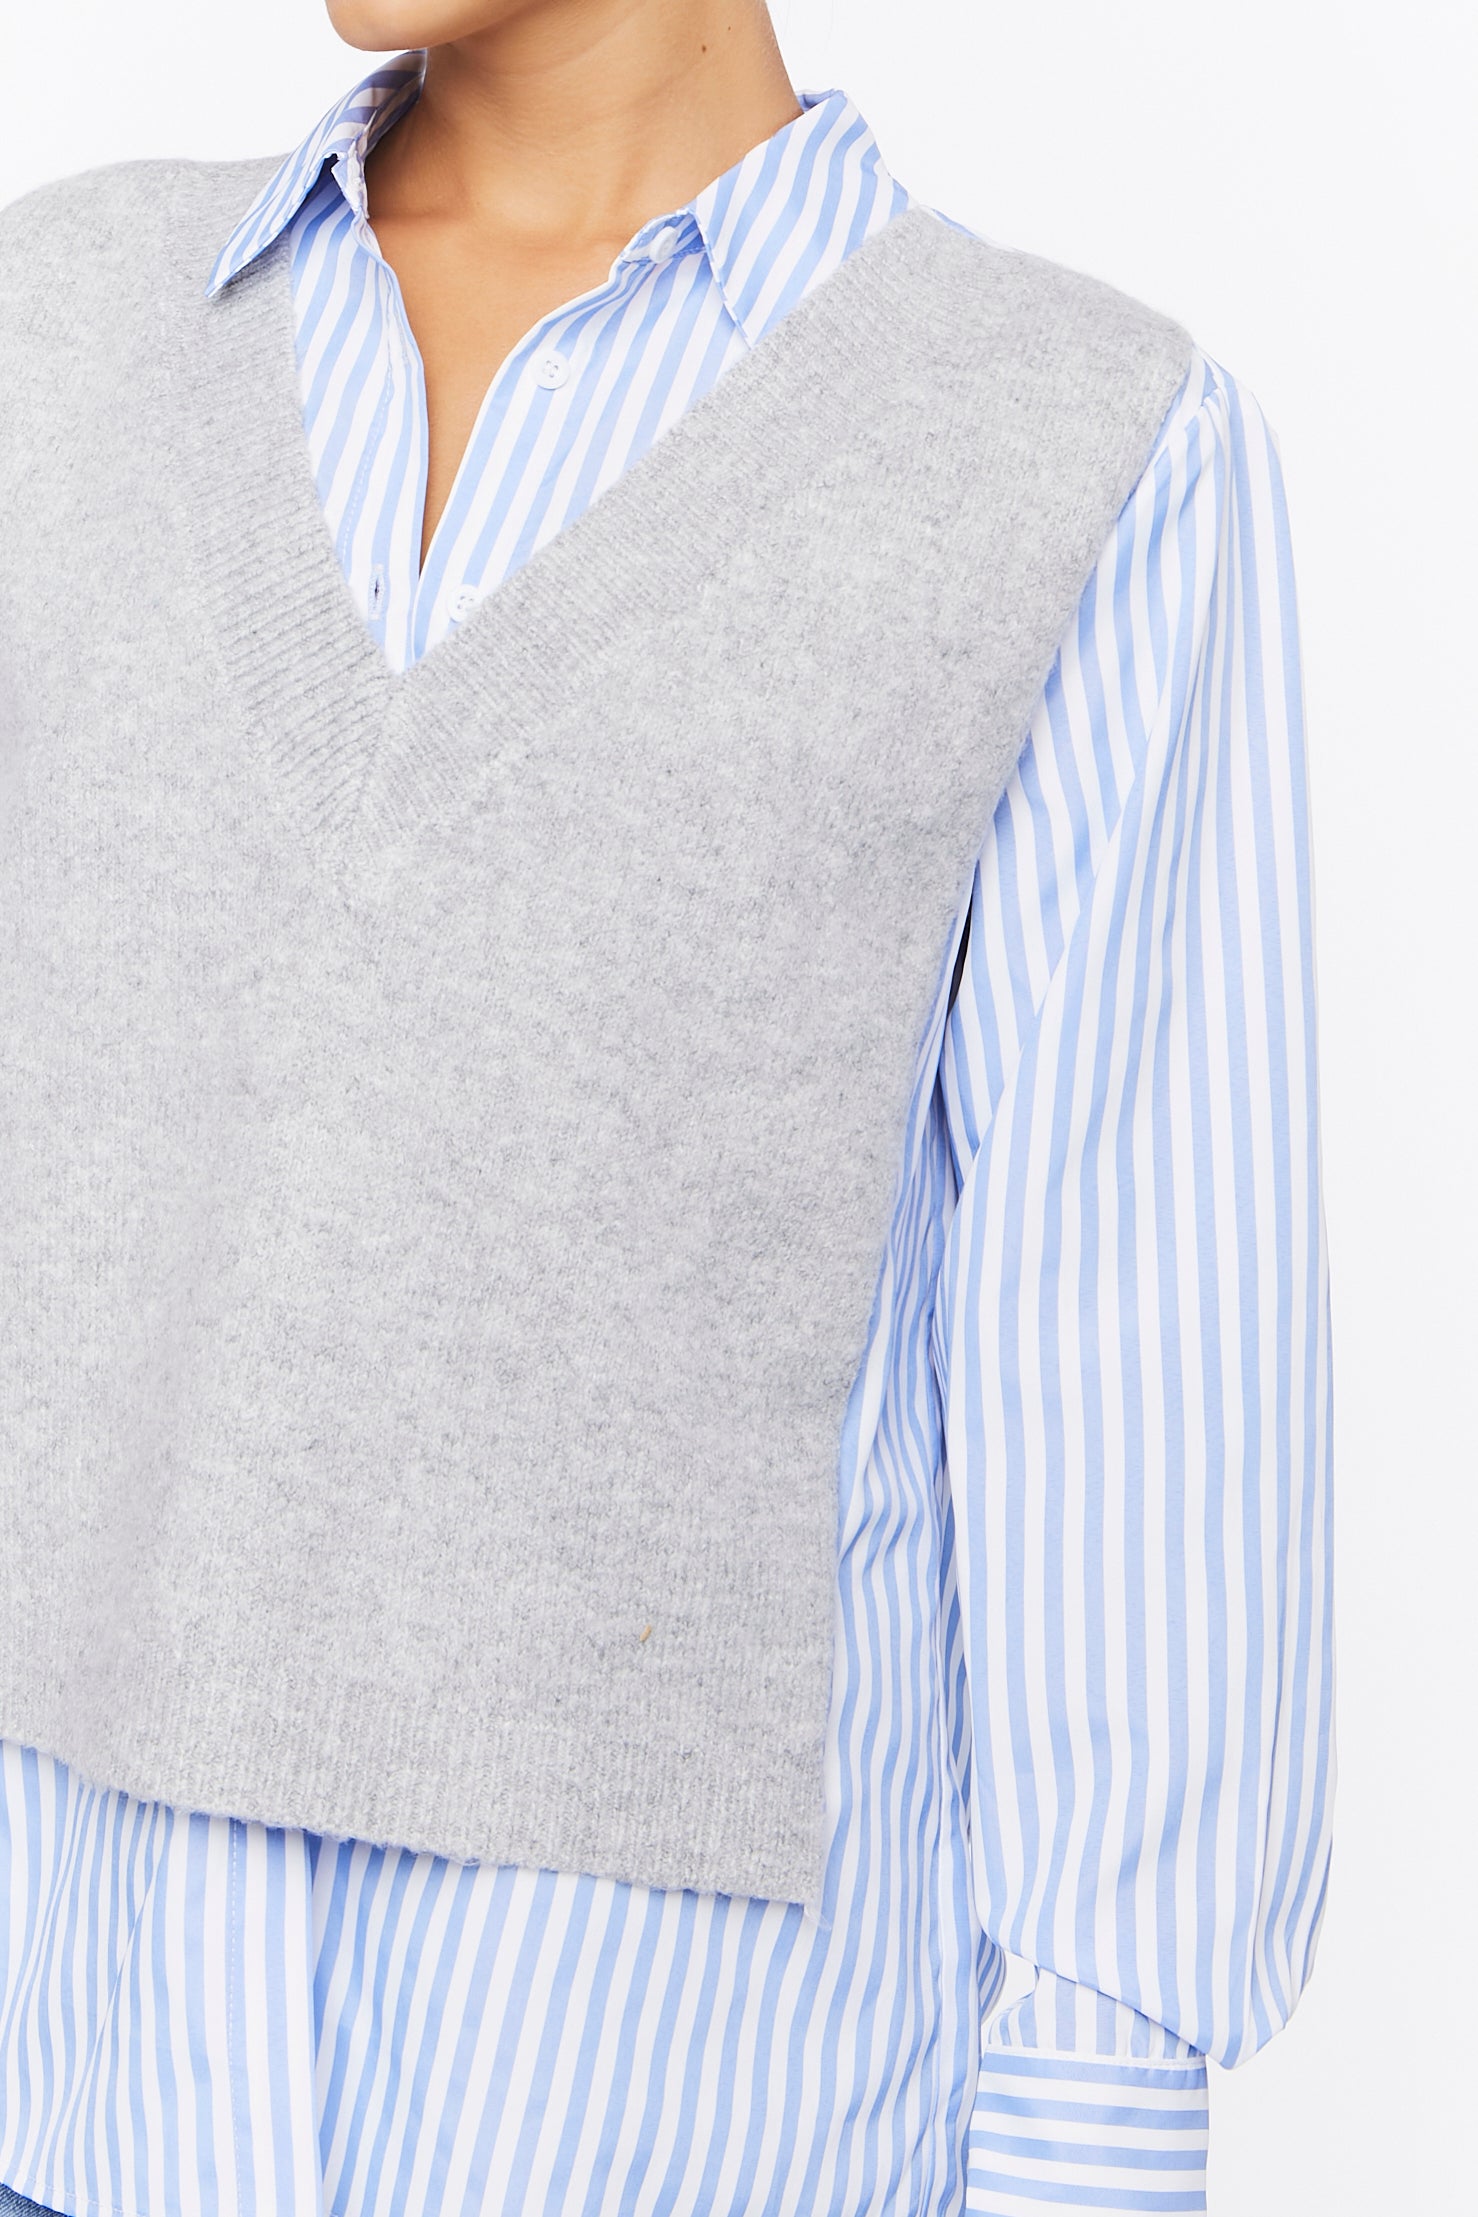 Greymulti Sweater Vest Combo Shirt 4